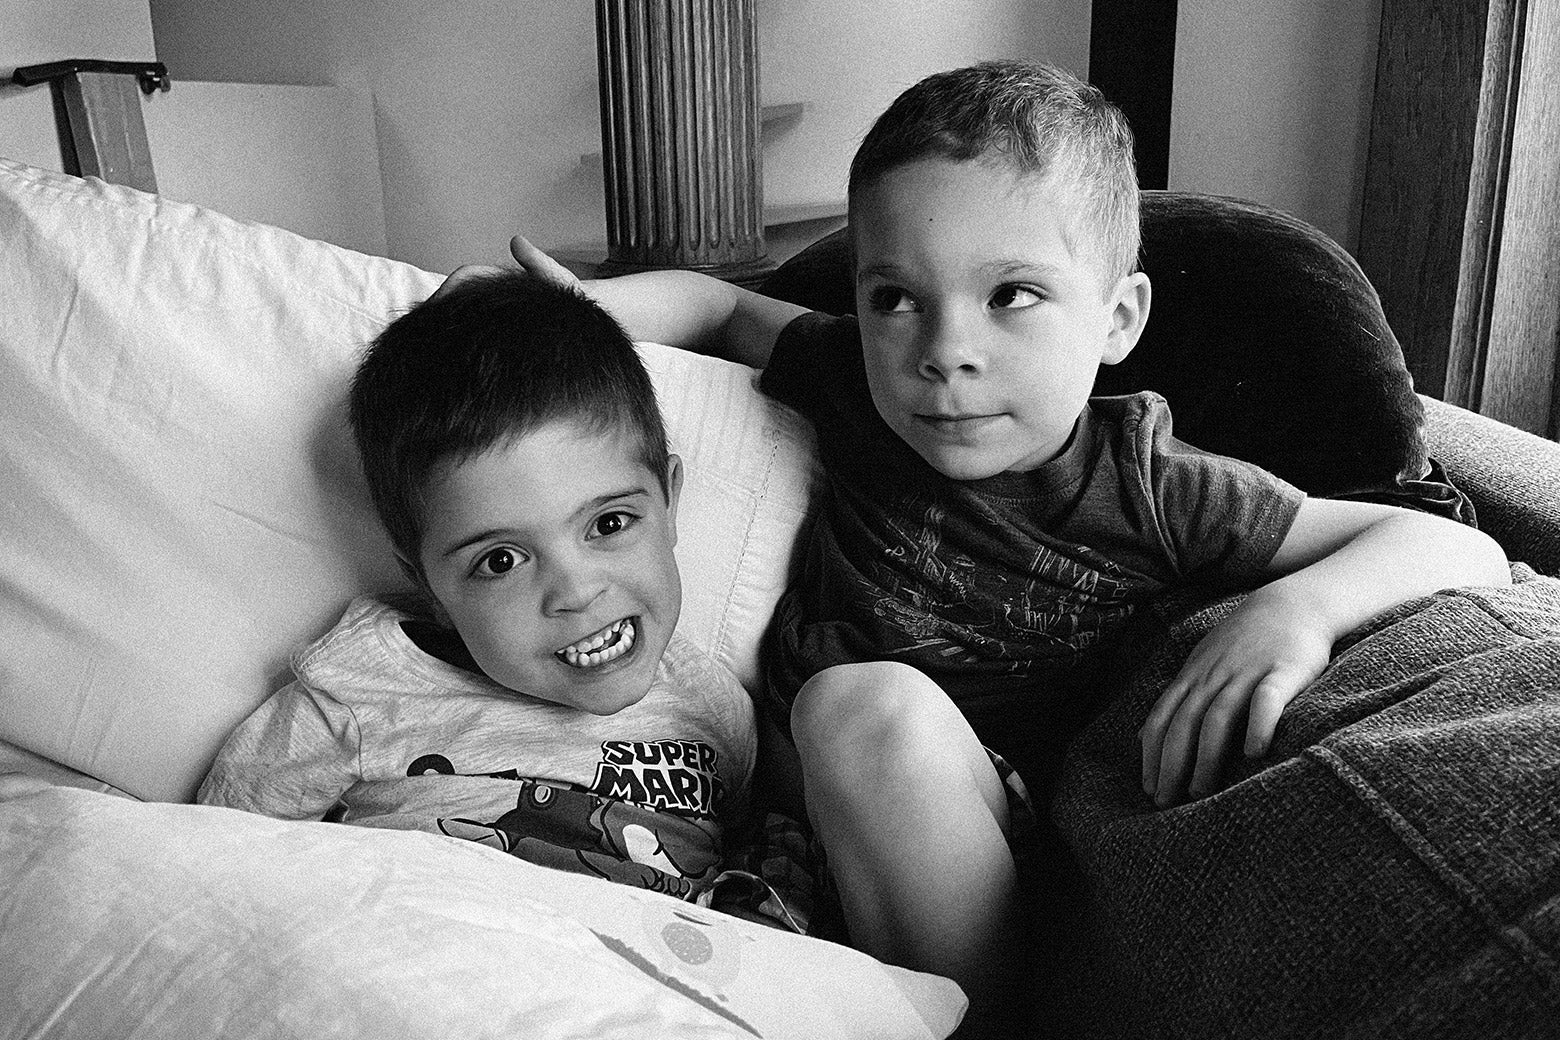 Two young boys play among cushions.